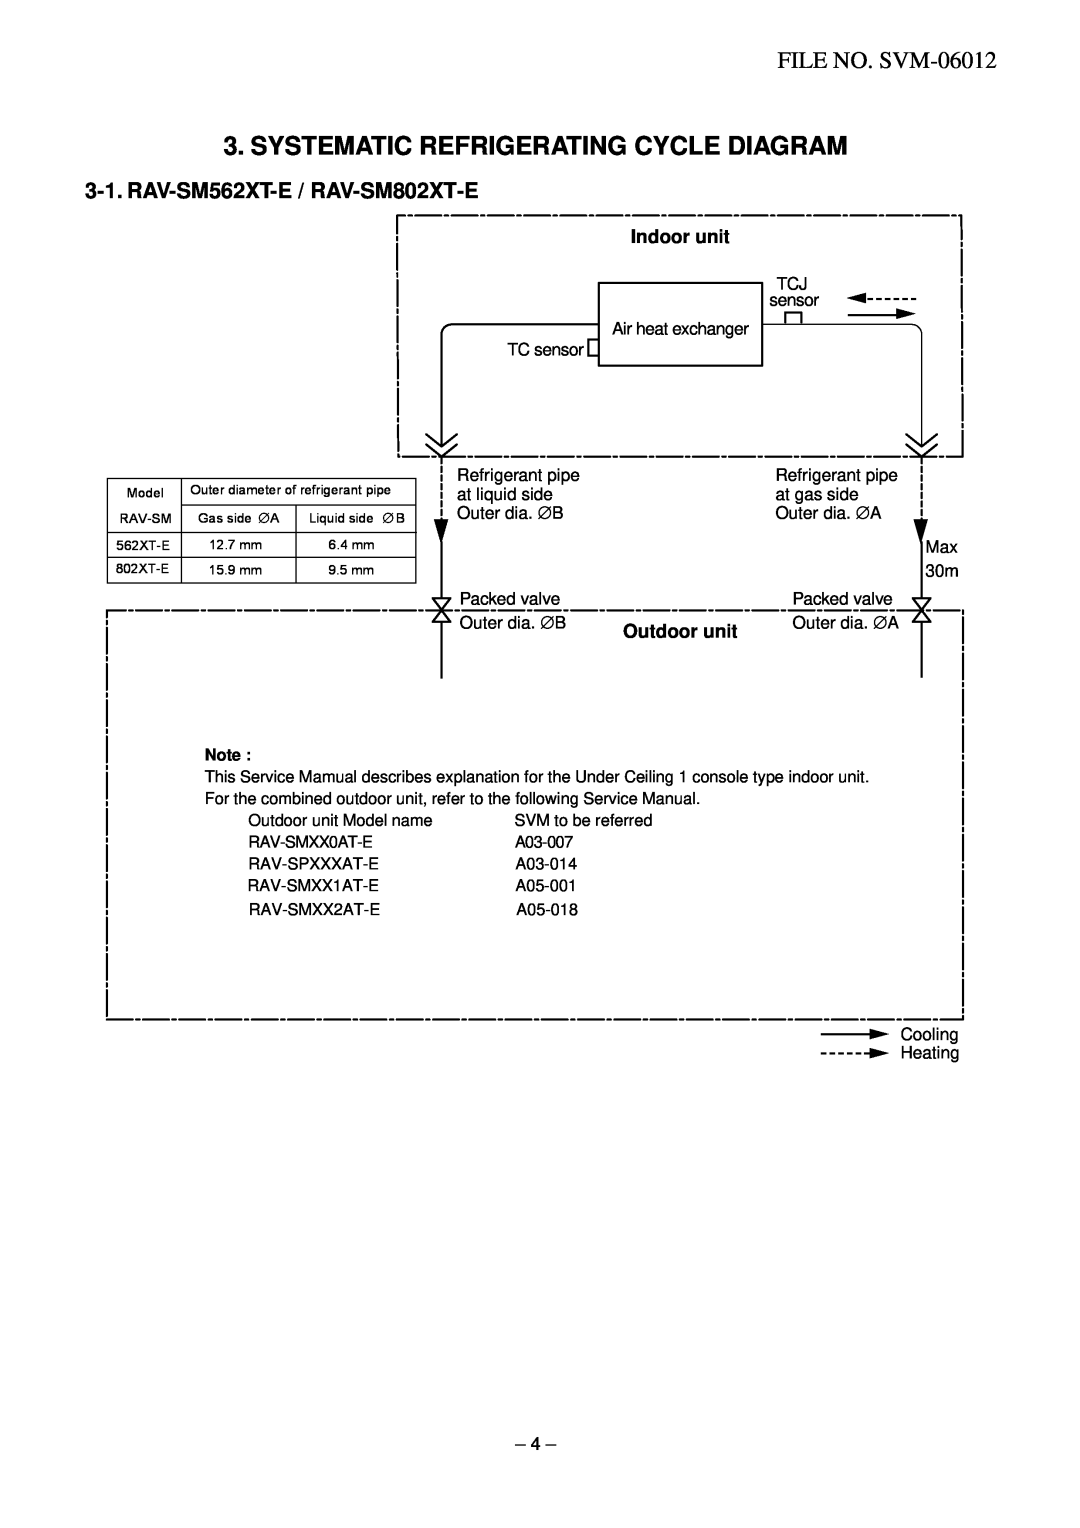 Toshiba Systematic Refrigerating Cycle Diagram, RAV-SM562XT-E / RAV-SM802XT-E, FILE NO. SVM-06012, Indoor unit 